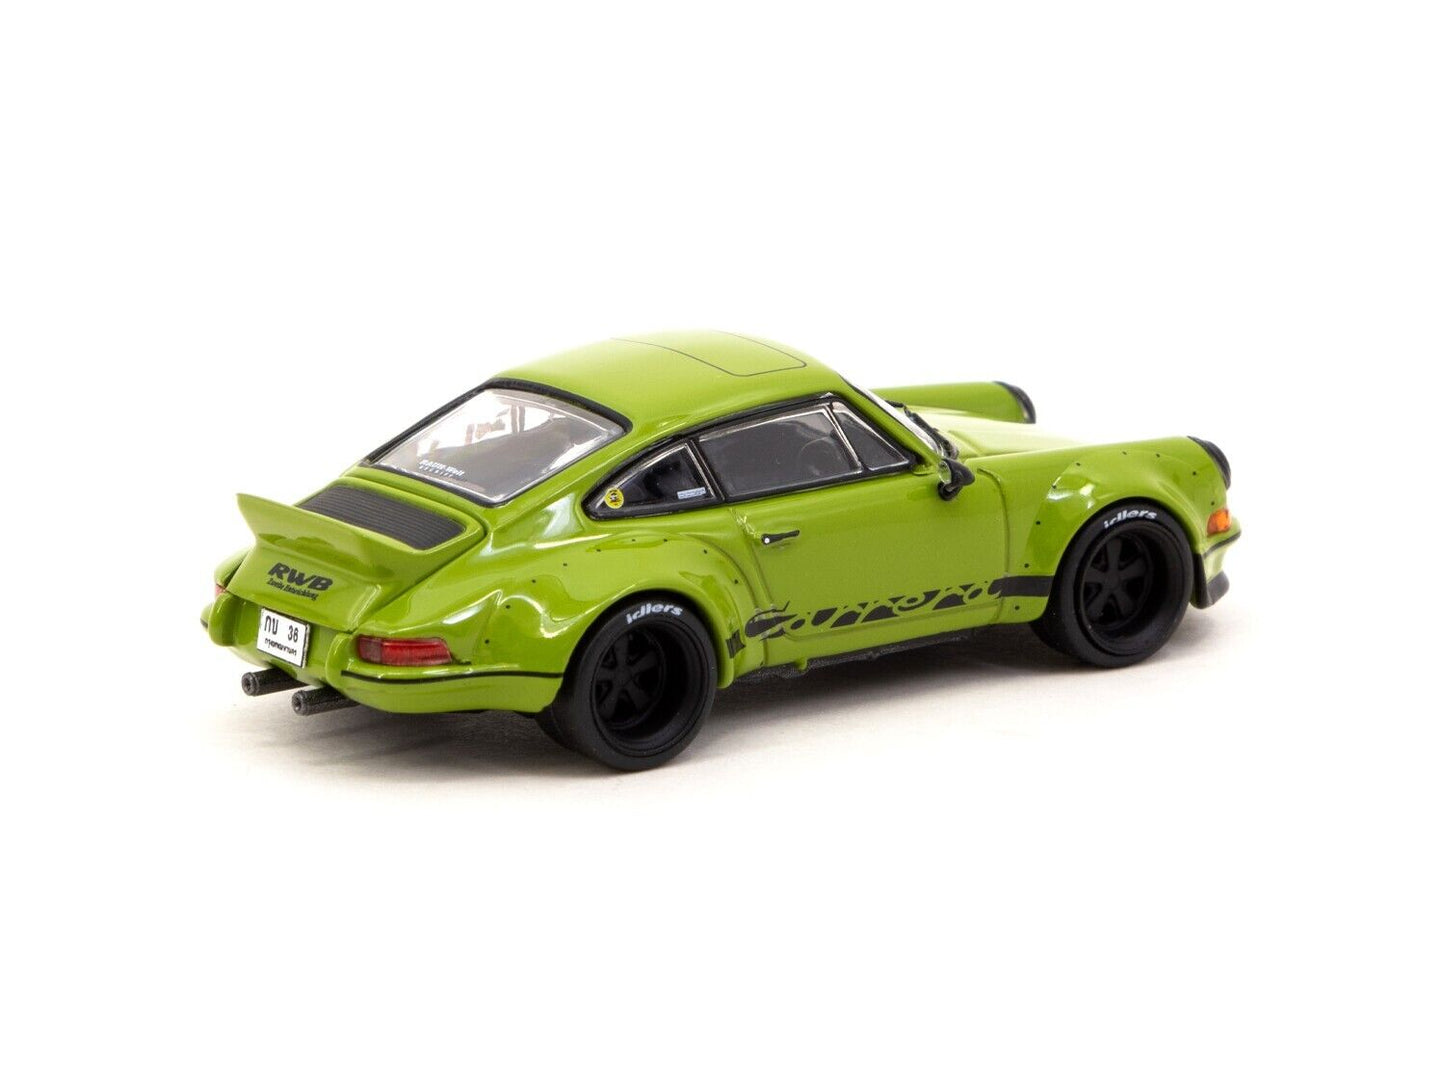 Tarmac Porsche RWB Backdate Olive Green 1:64